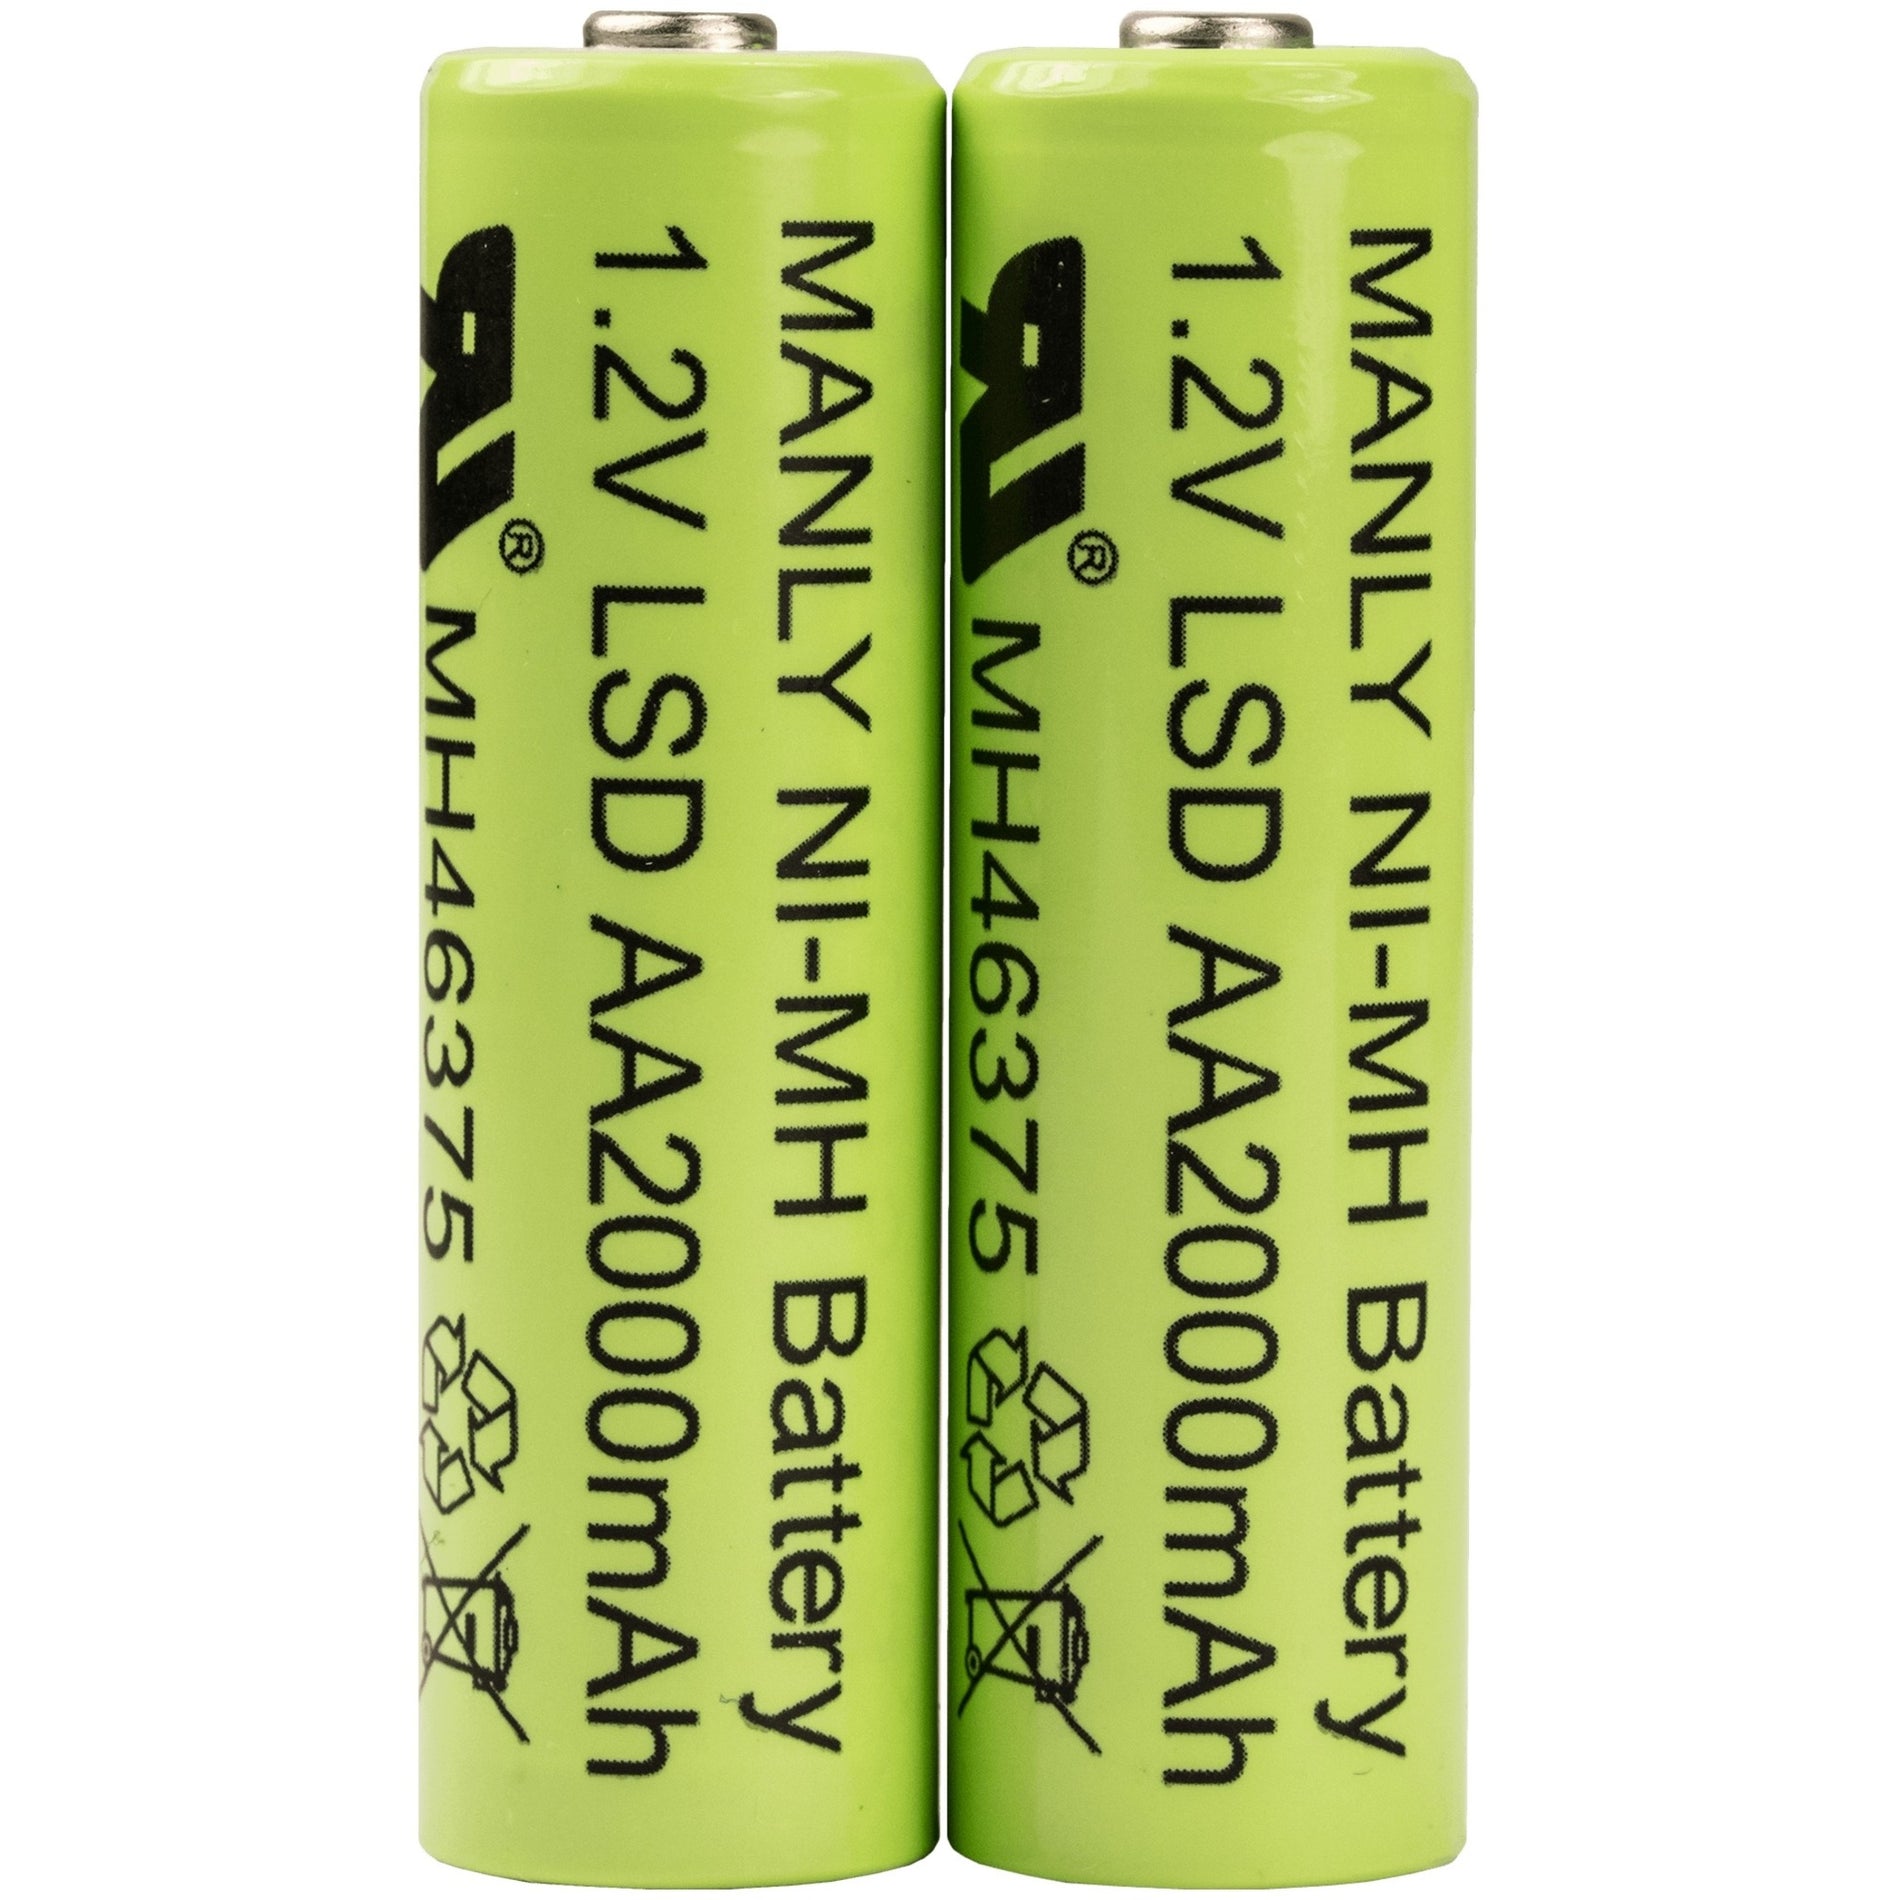 Socket Mobile AC4147-1905 AA NiMH Batteries for SocketScan S700/S730/S740/S760 - 20 Batteries